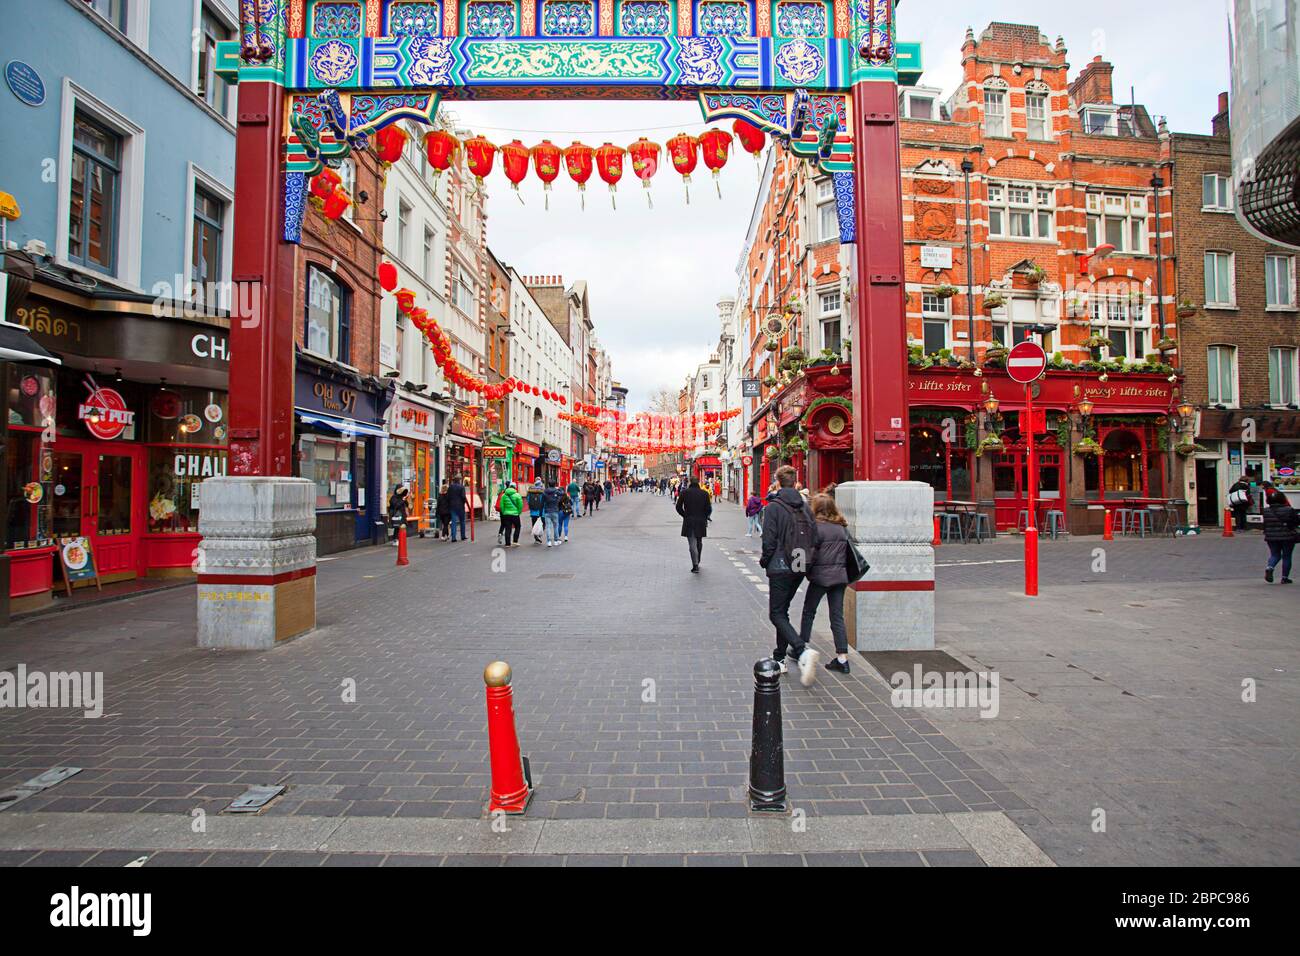 China Town, West End, Londres, Royaume-Uni Banque D'Images